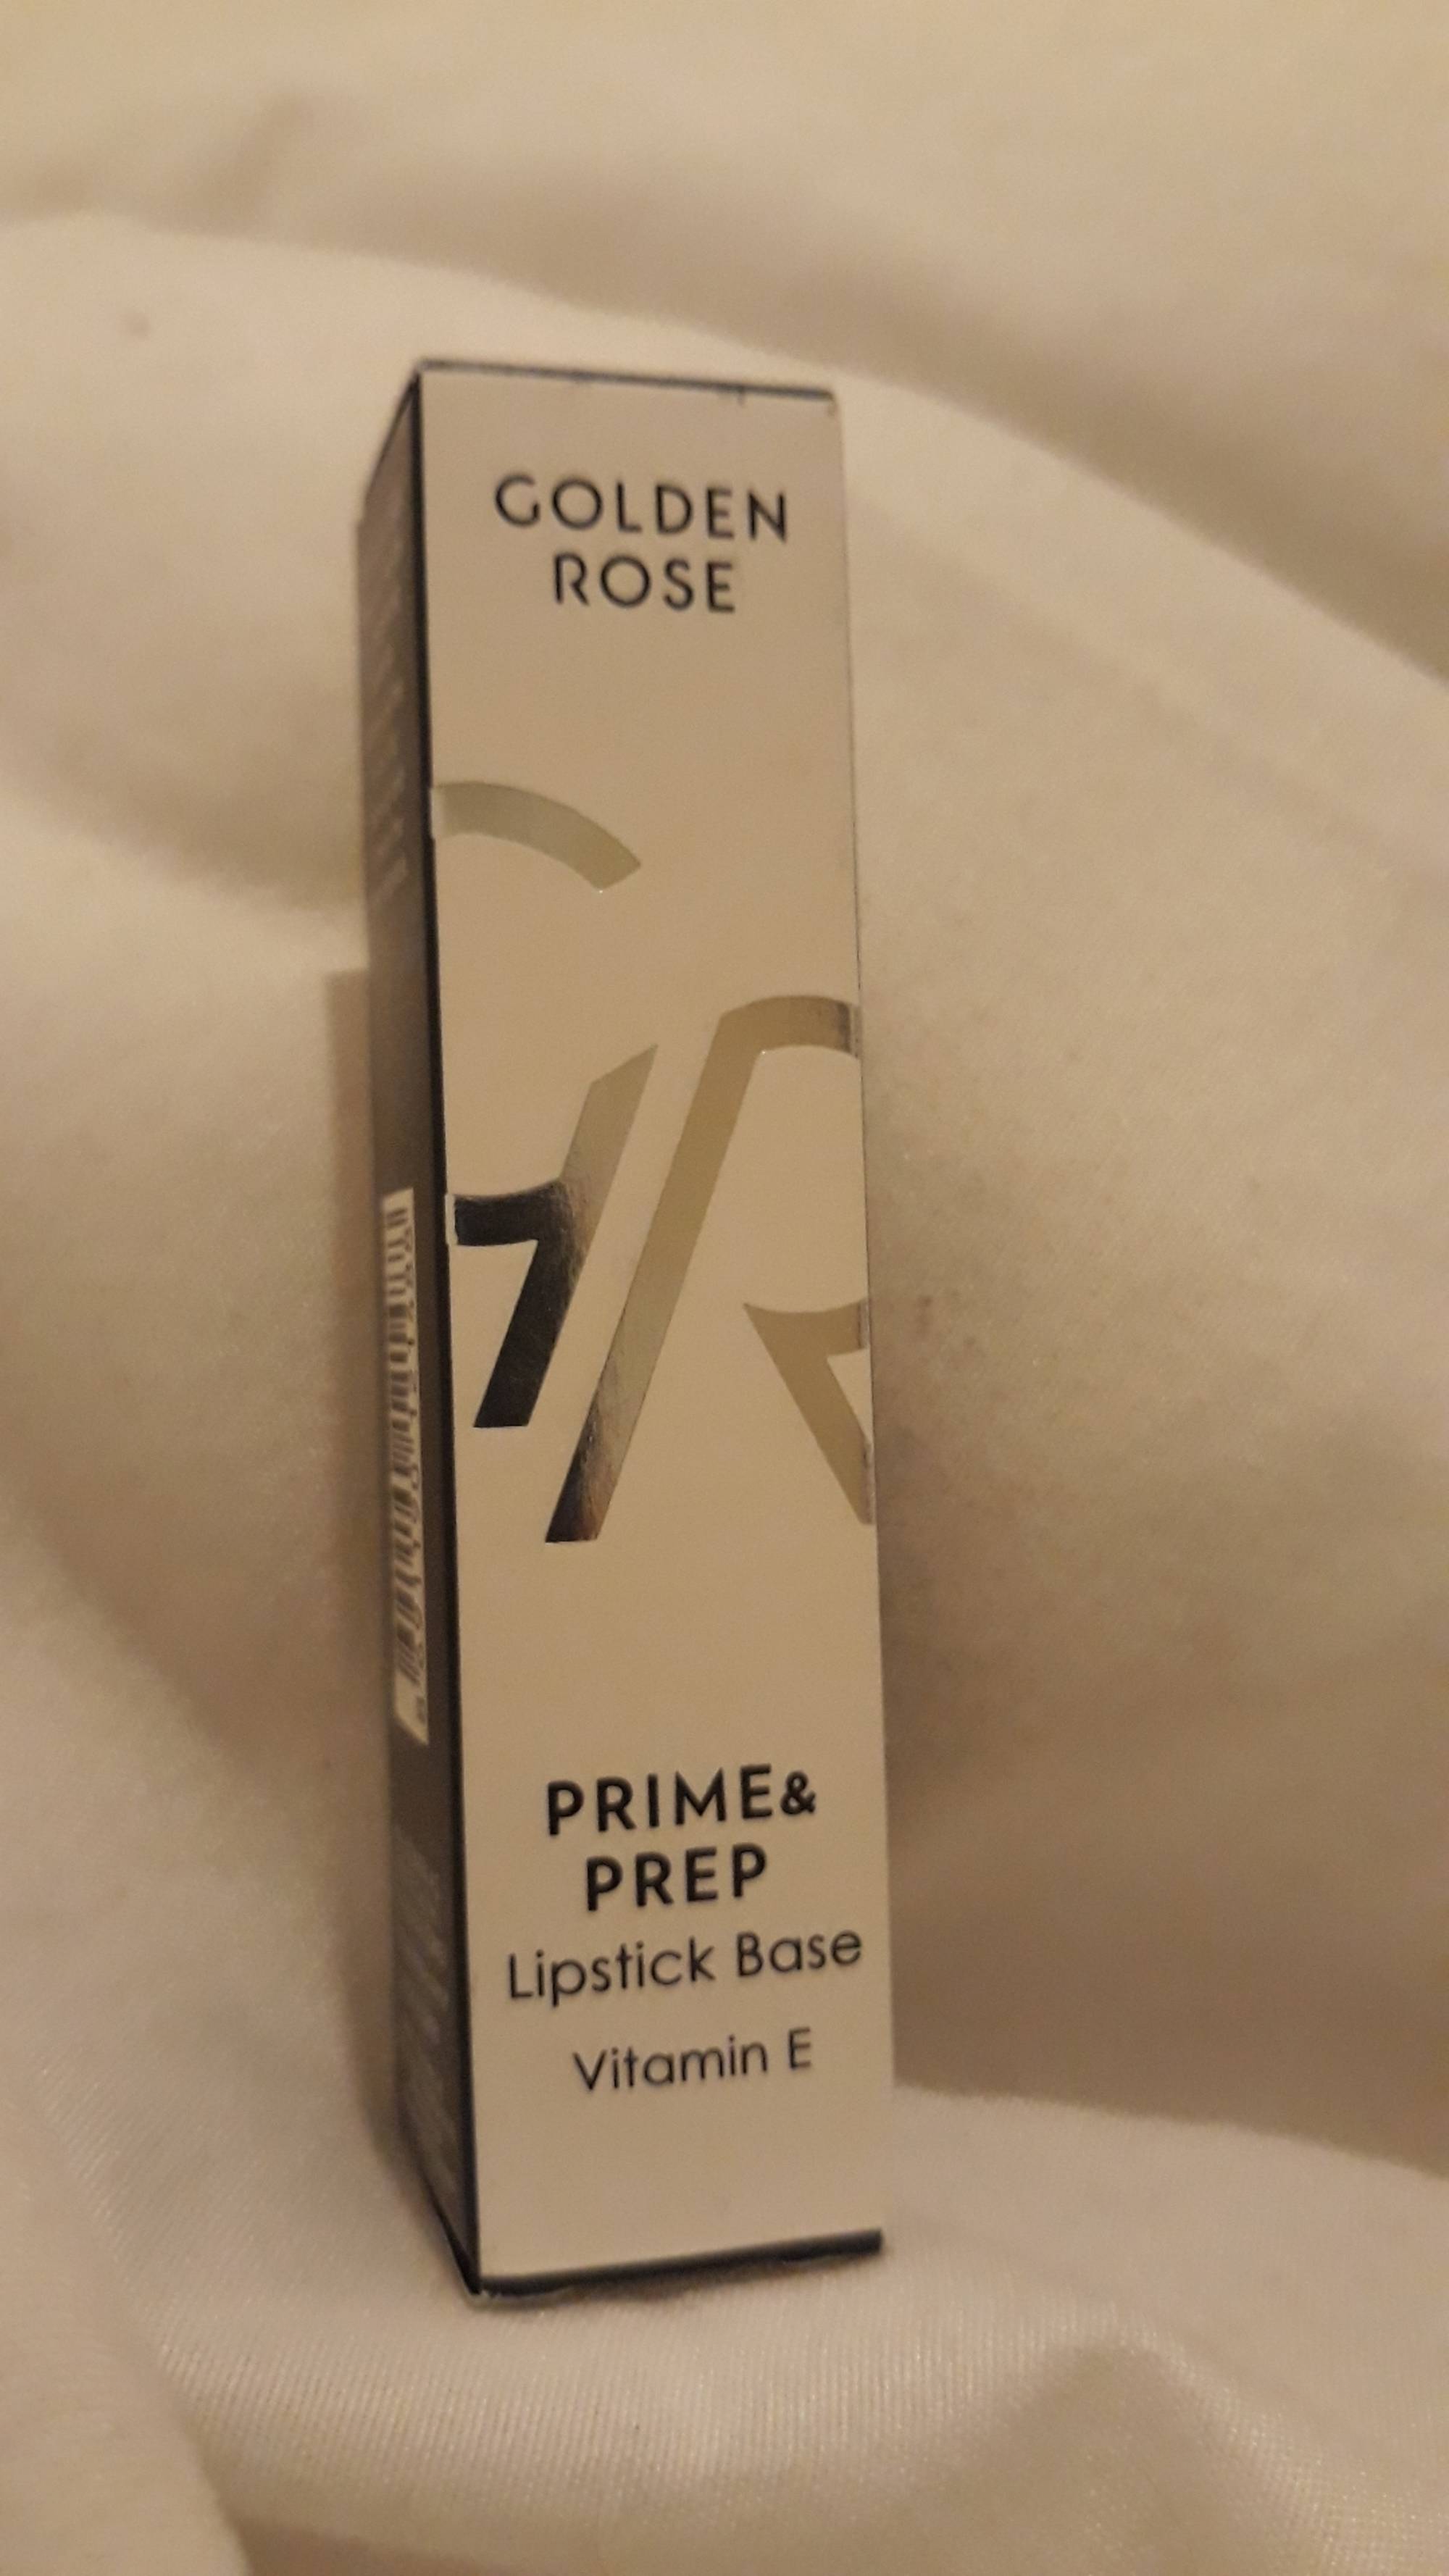 GOLDEN ROSE - Prime & prep - Lipstick base vitamine E